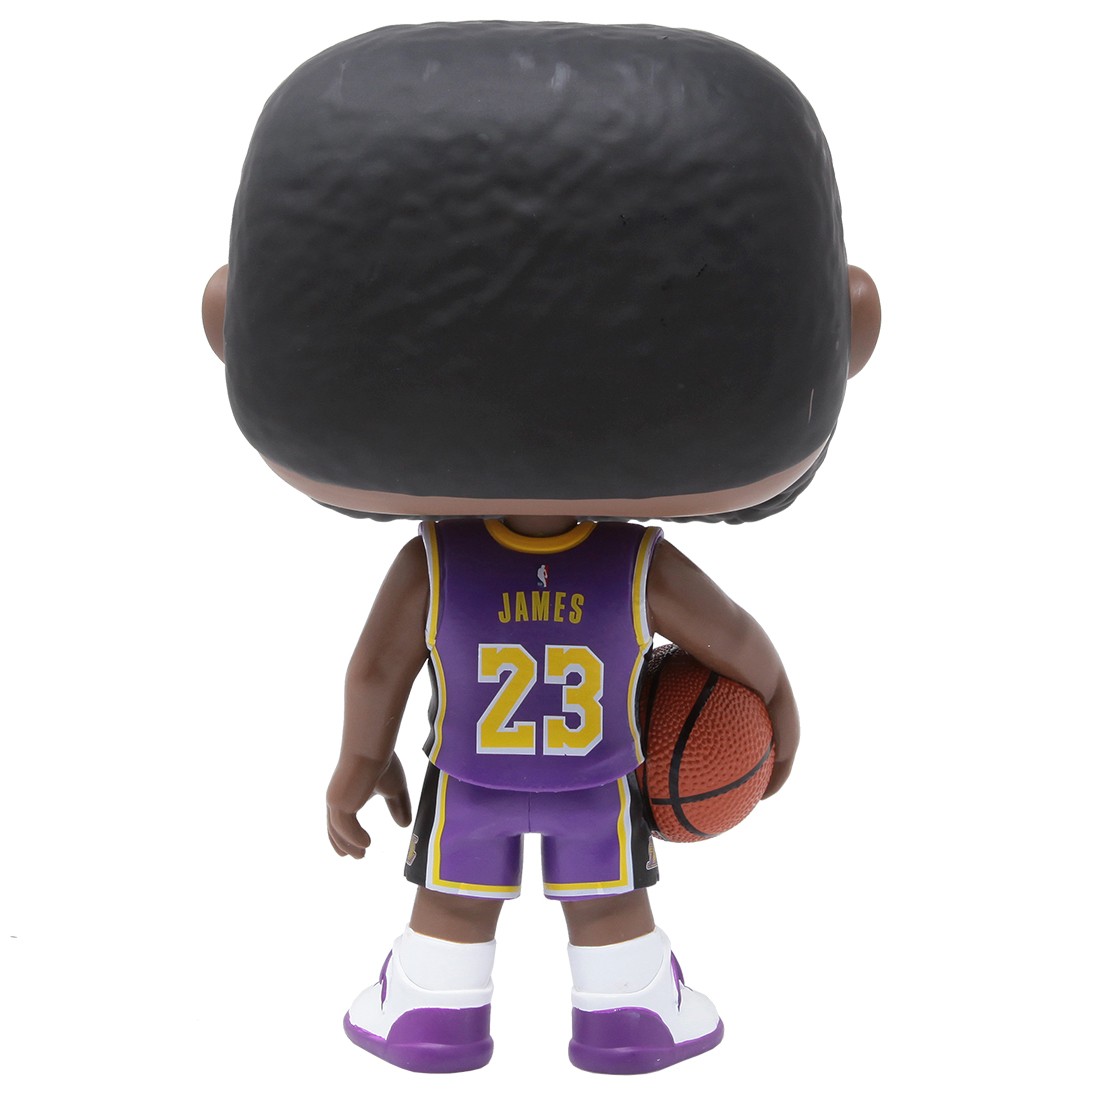 Funko POP Basketball NBA LA Lakers - 10 Inch LeBron James purple